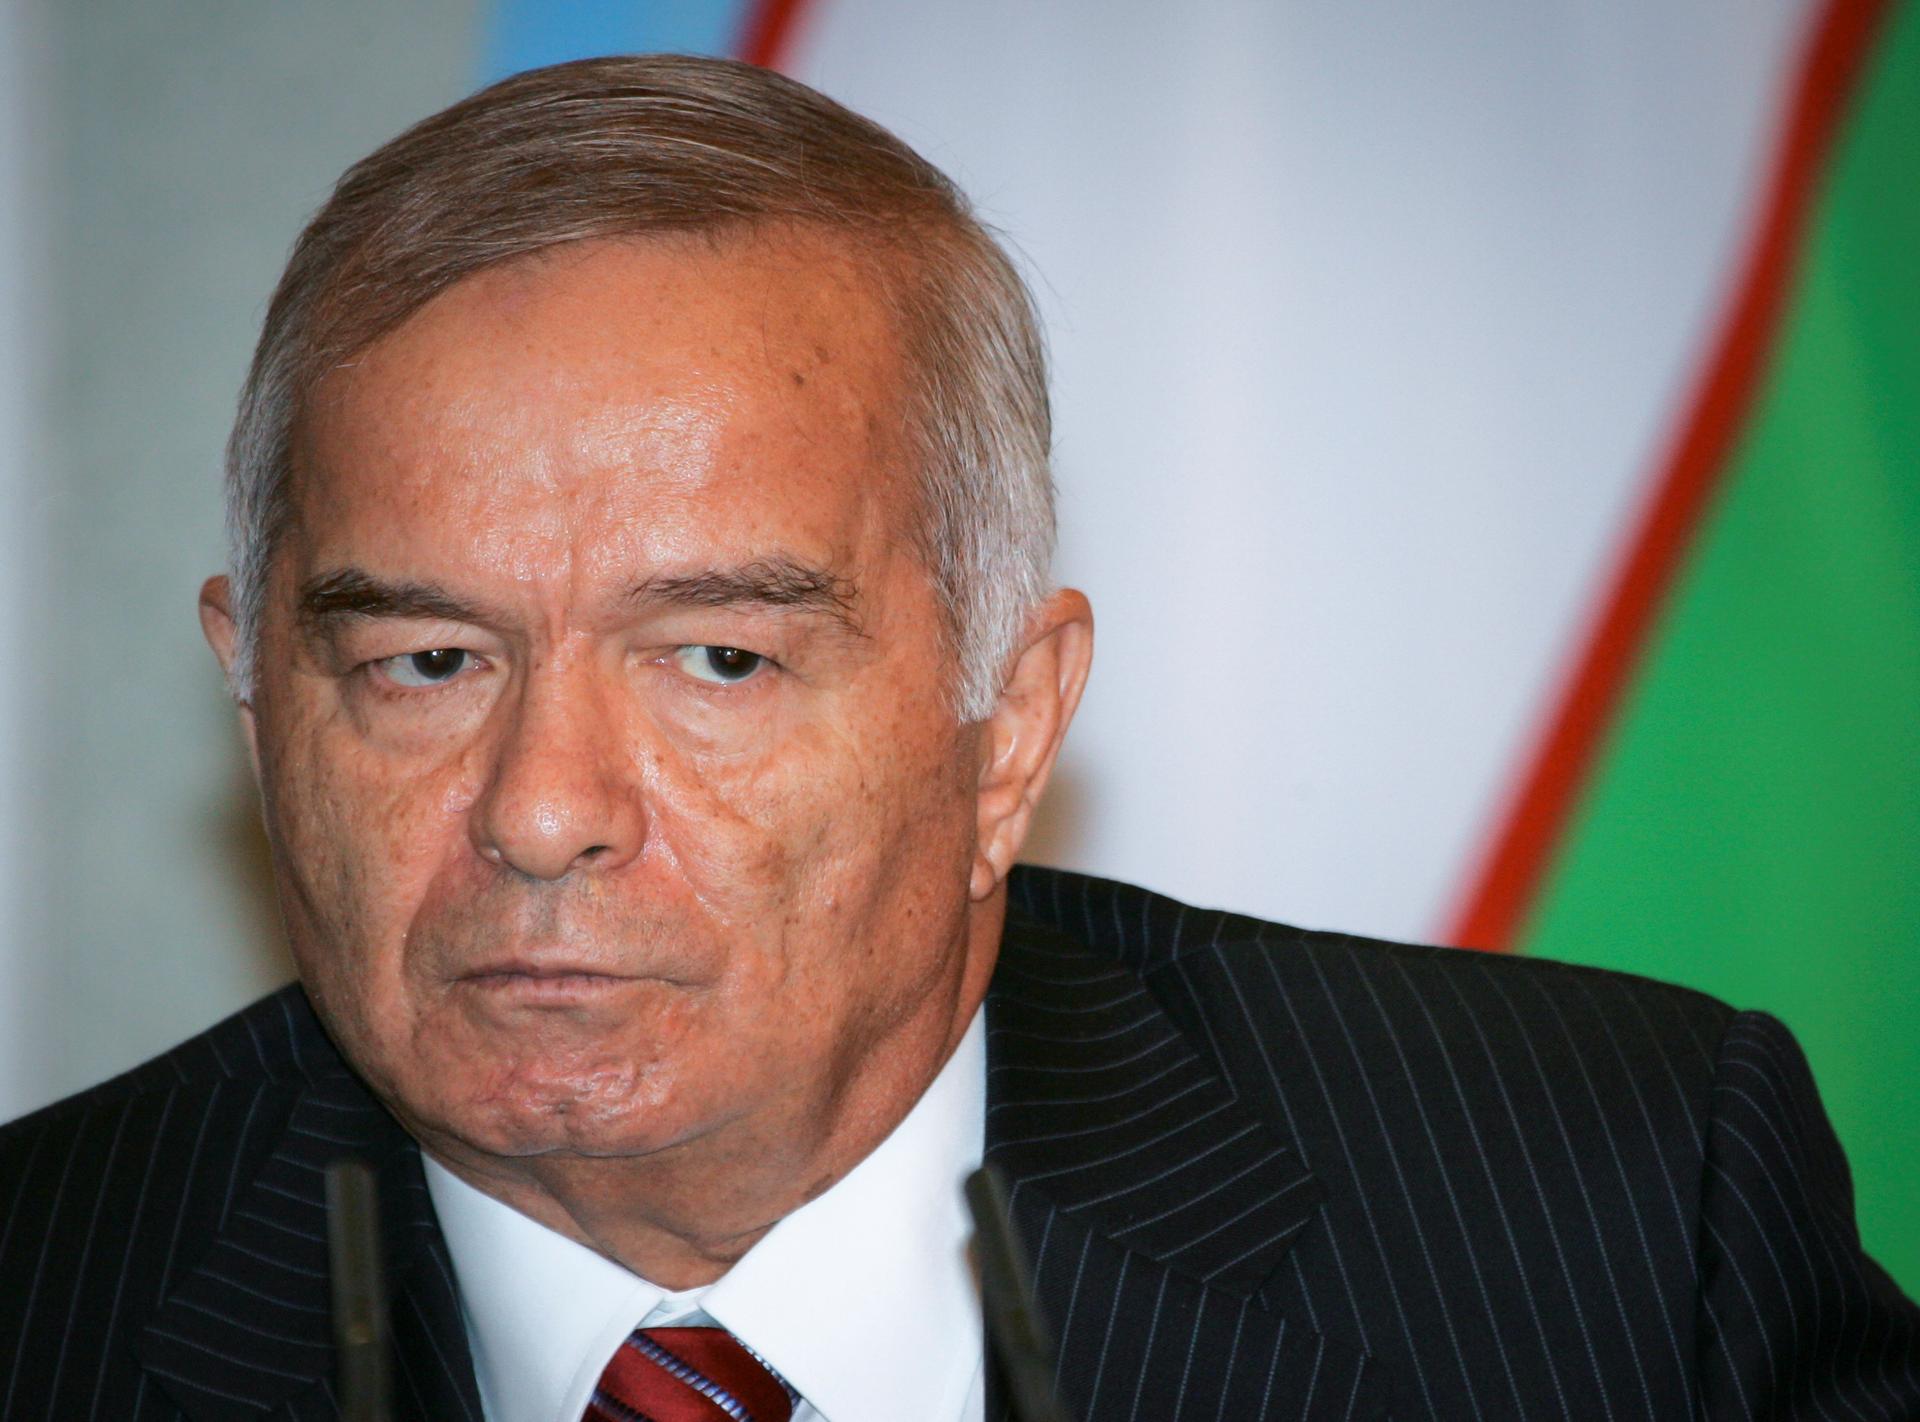 Uzbekistan's President Islam Karimov attends a news conference in Tashkent, Uzbekistan, on Aug. 29, 2006.